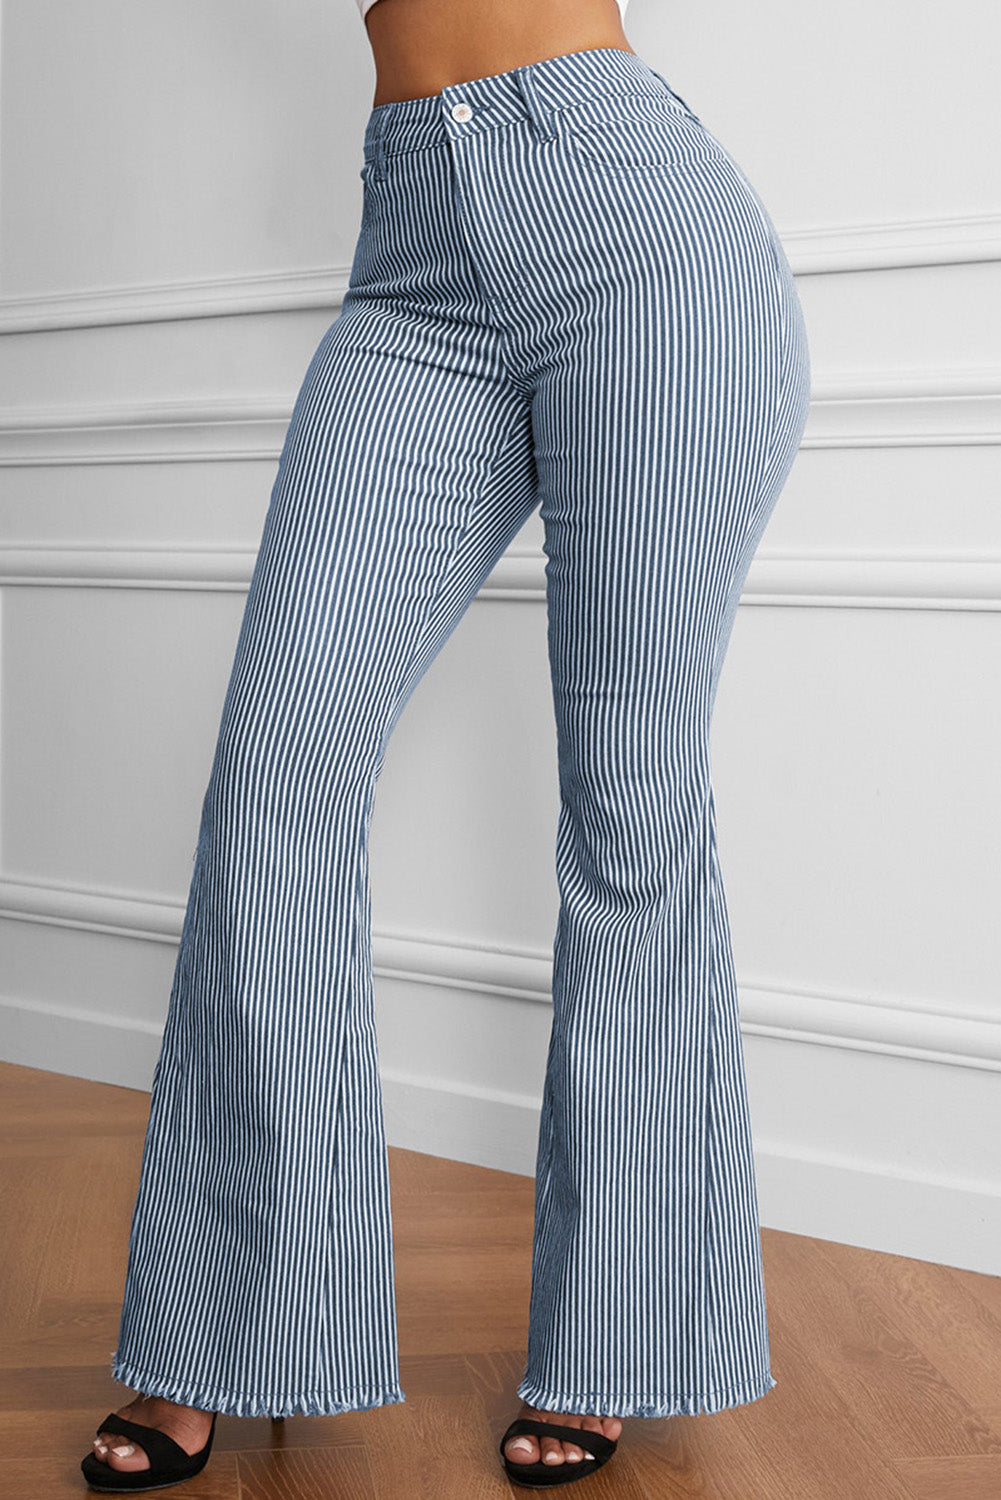 - Light Blue Stripe Casual Mid Waist Women's Bell Bottom Jeans - womens jeans at TFC&H Co.